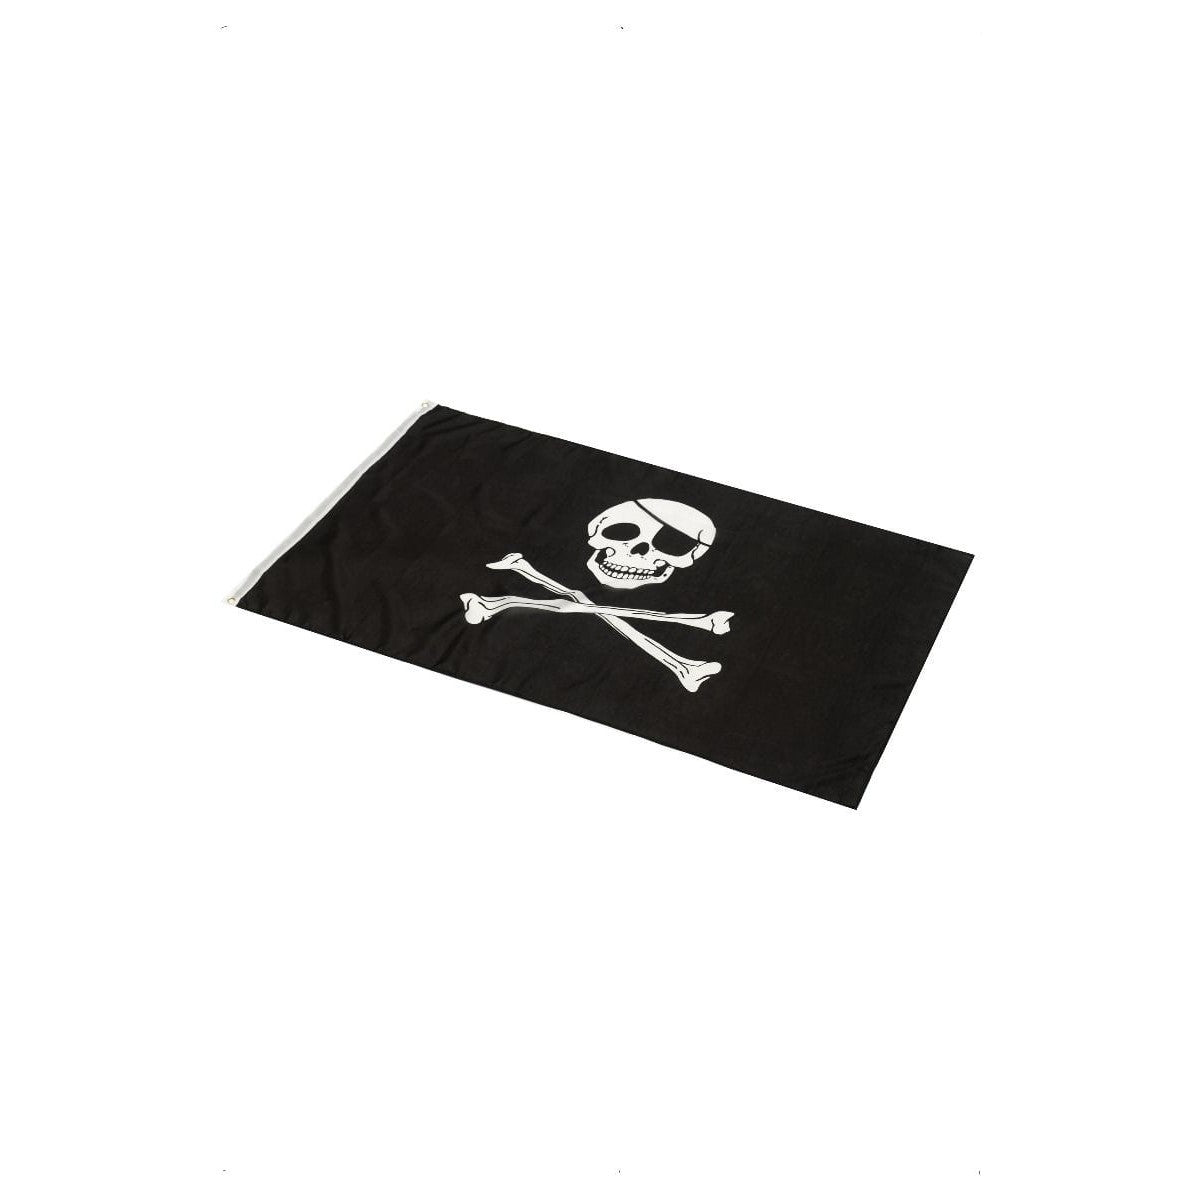 Piratenflagge schwarz